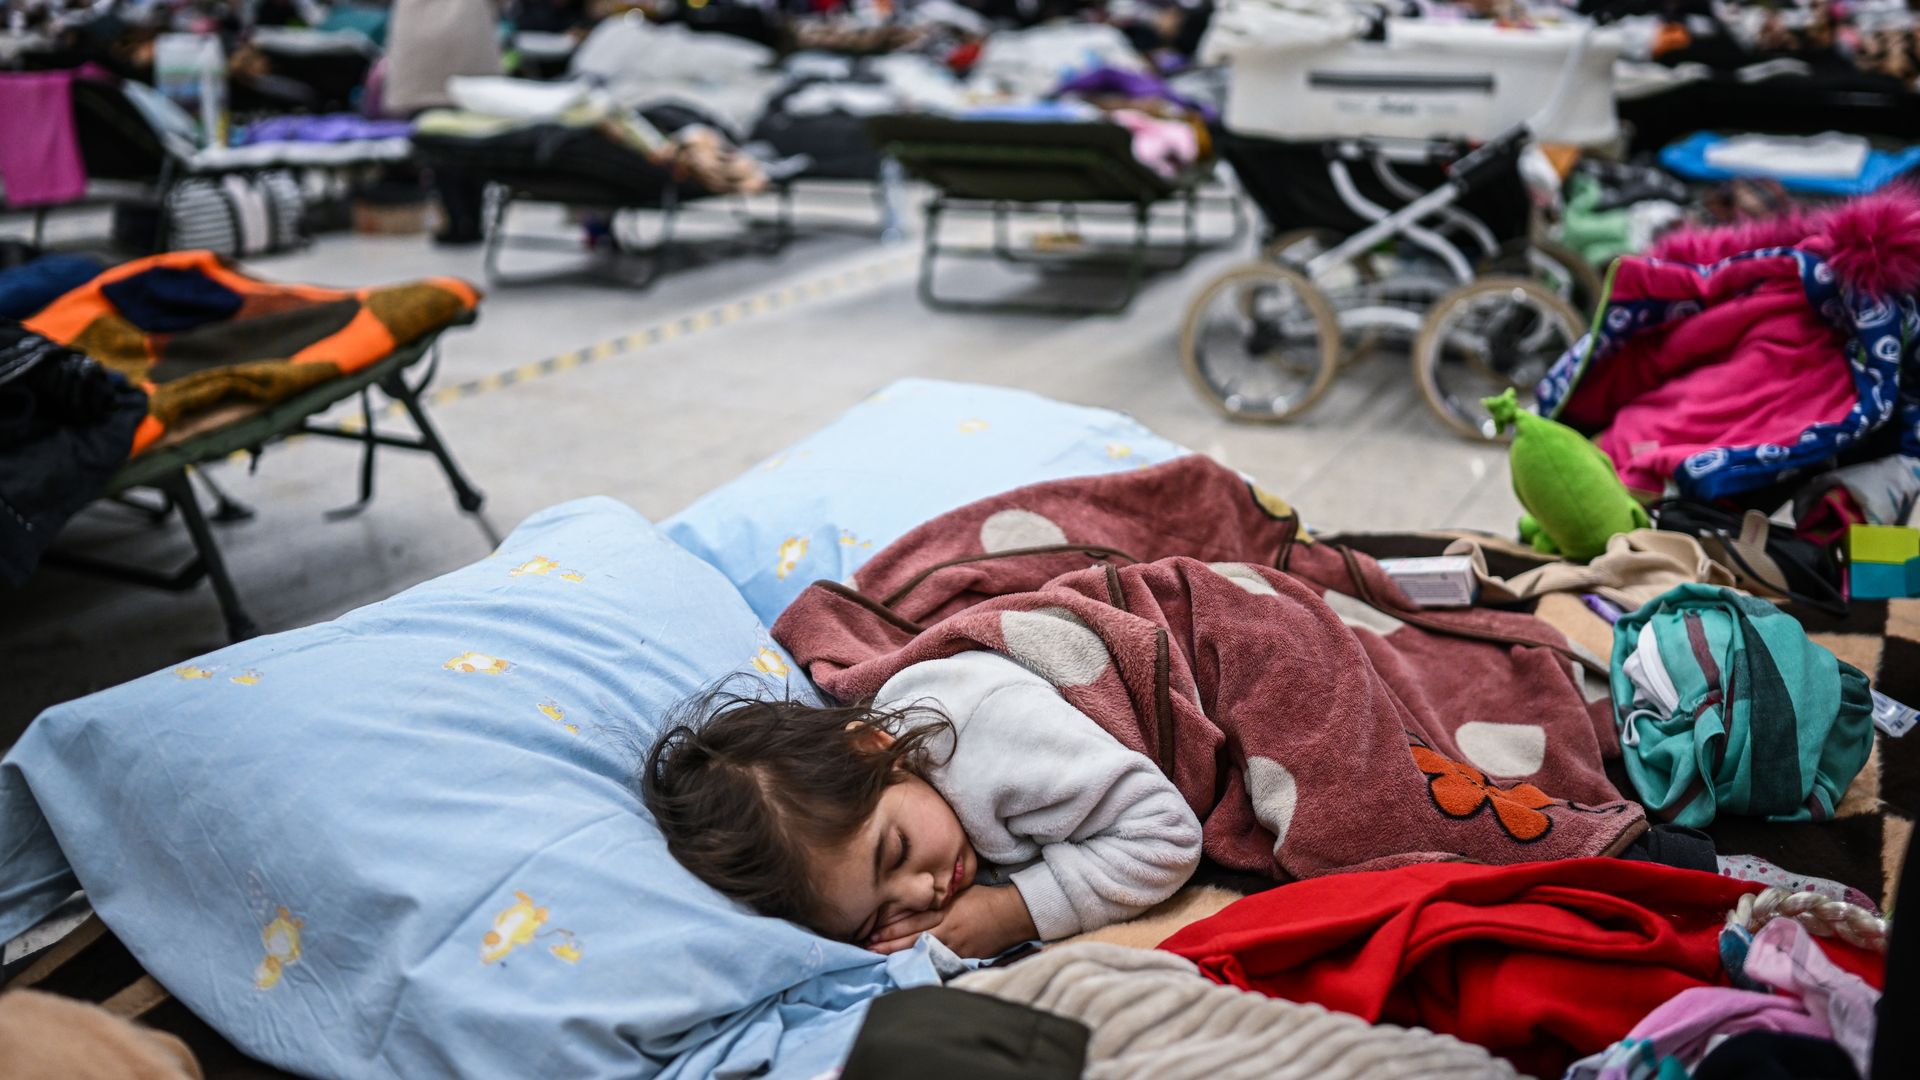 Children who fled the war in Ukraine rest inside a temporary refugee shelter on March 8 in Przemysl, Poland.